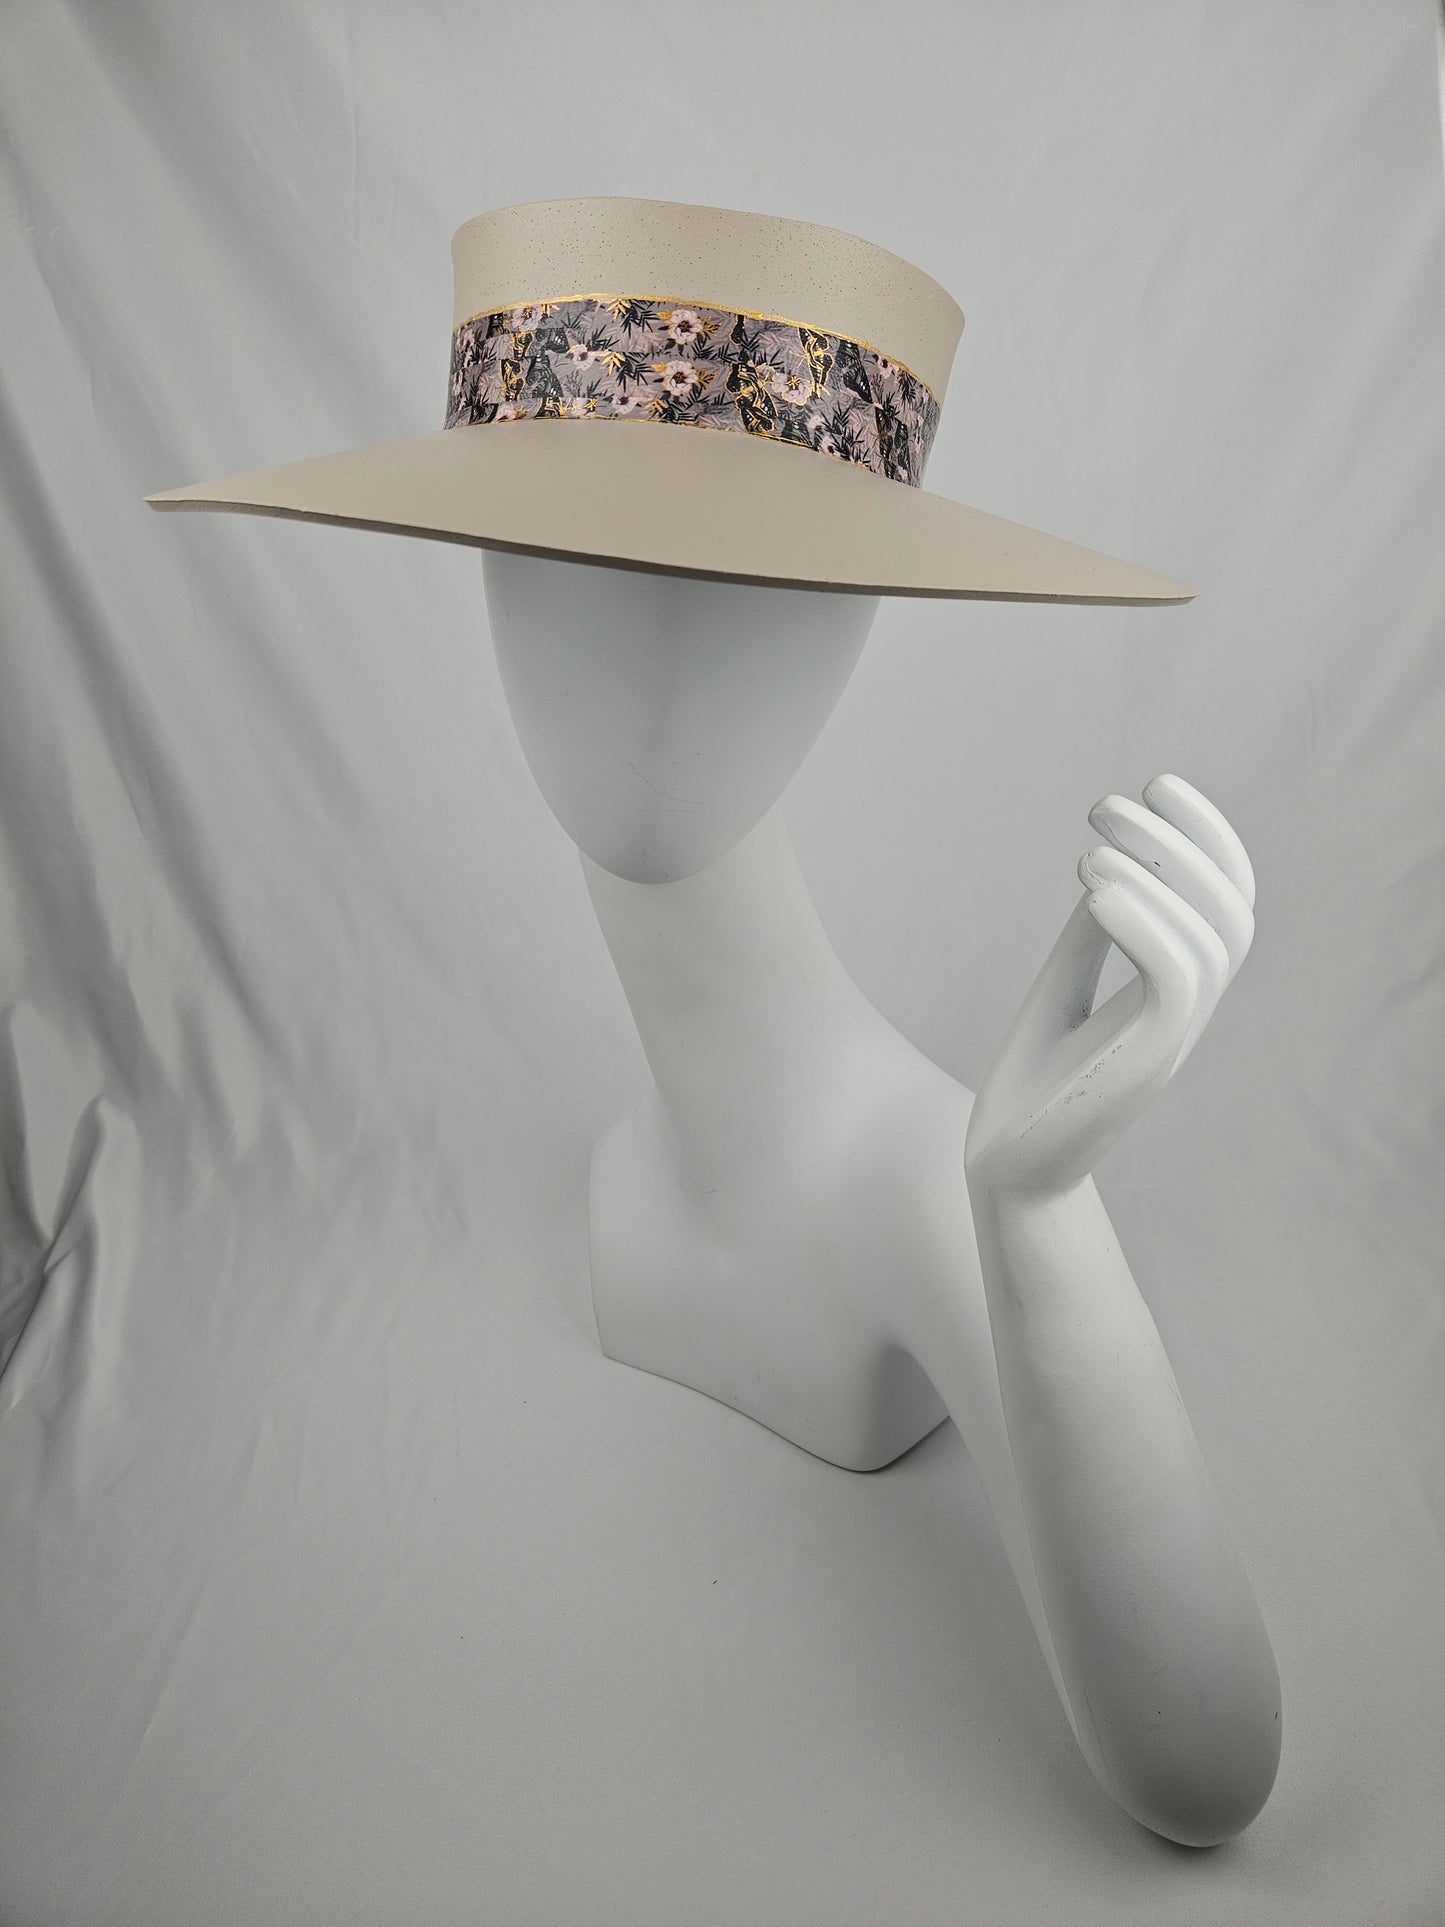 Truly Taupe Audrey Foam Sun Visor Hat with Elegant Light Pink and Lavender Floral Band: Walks, Brunch, Swim, Garden, Golf, Easter, Church, No Headache